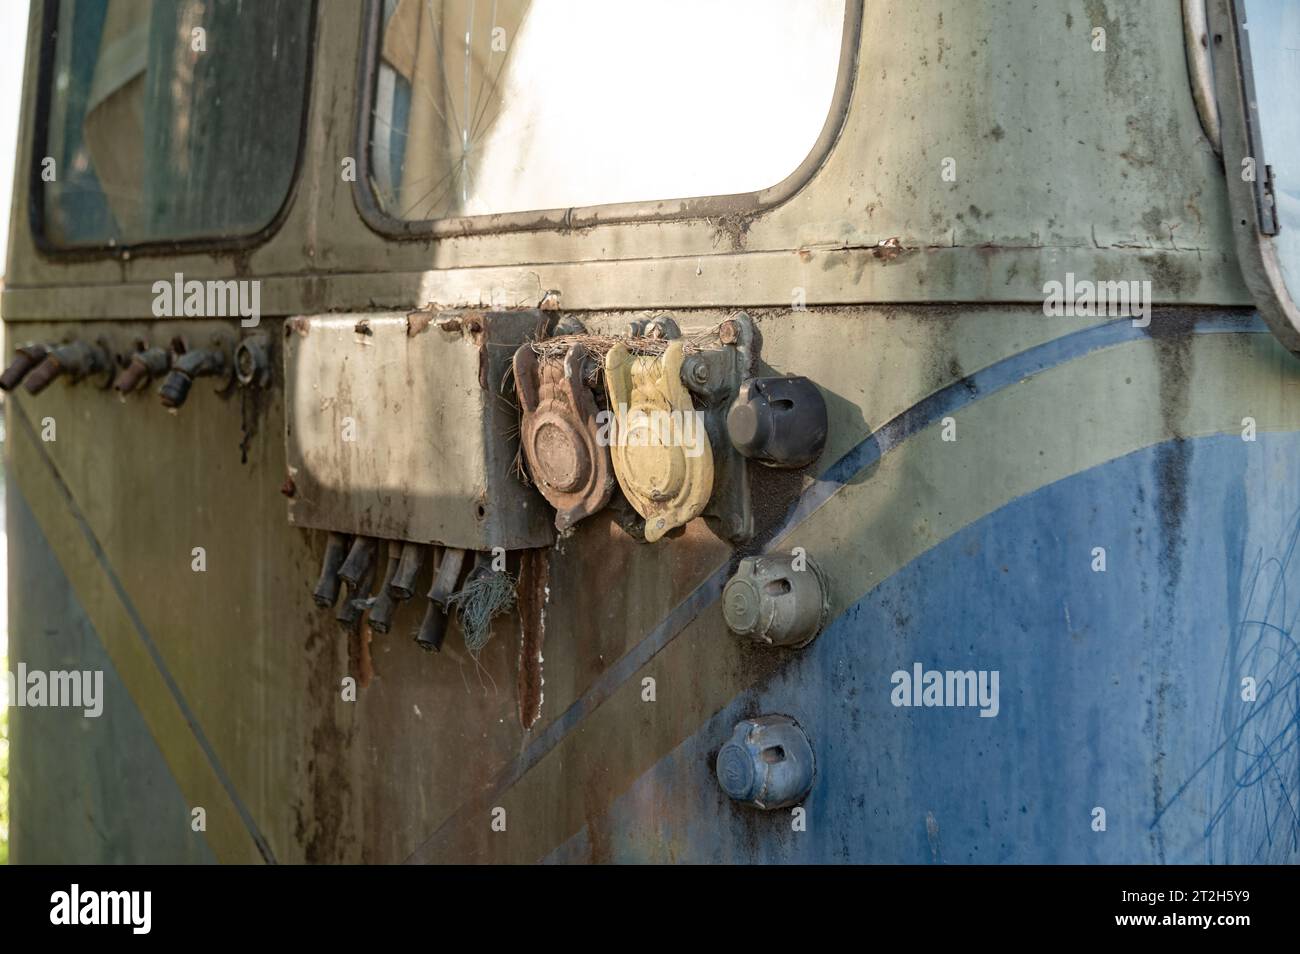 Abandoned Rack Railway Train in Diakopto Greece Stock Photo